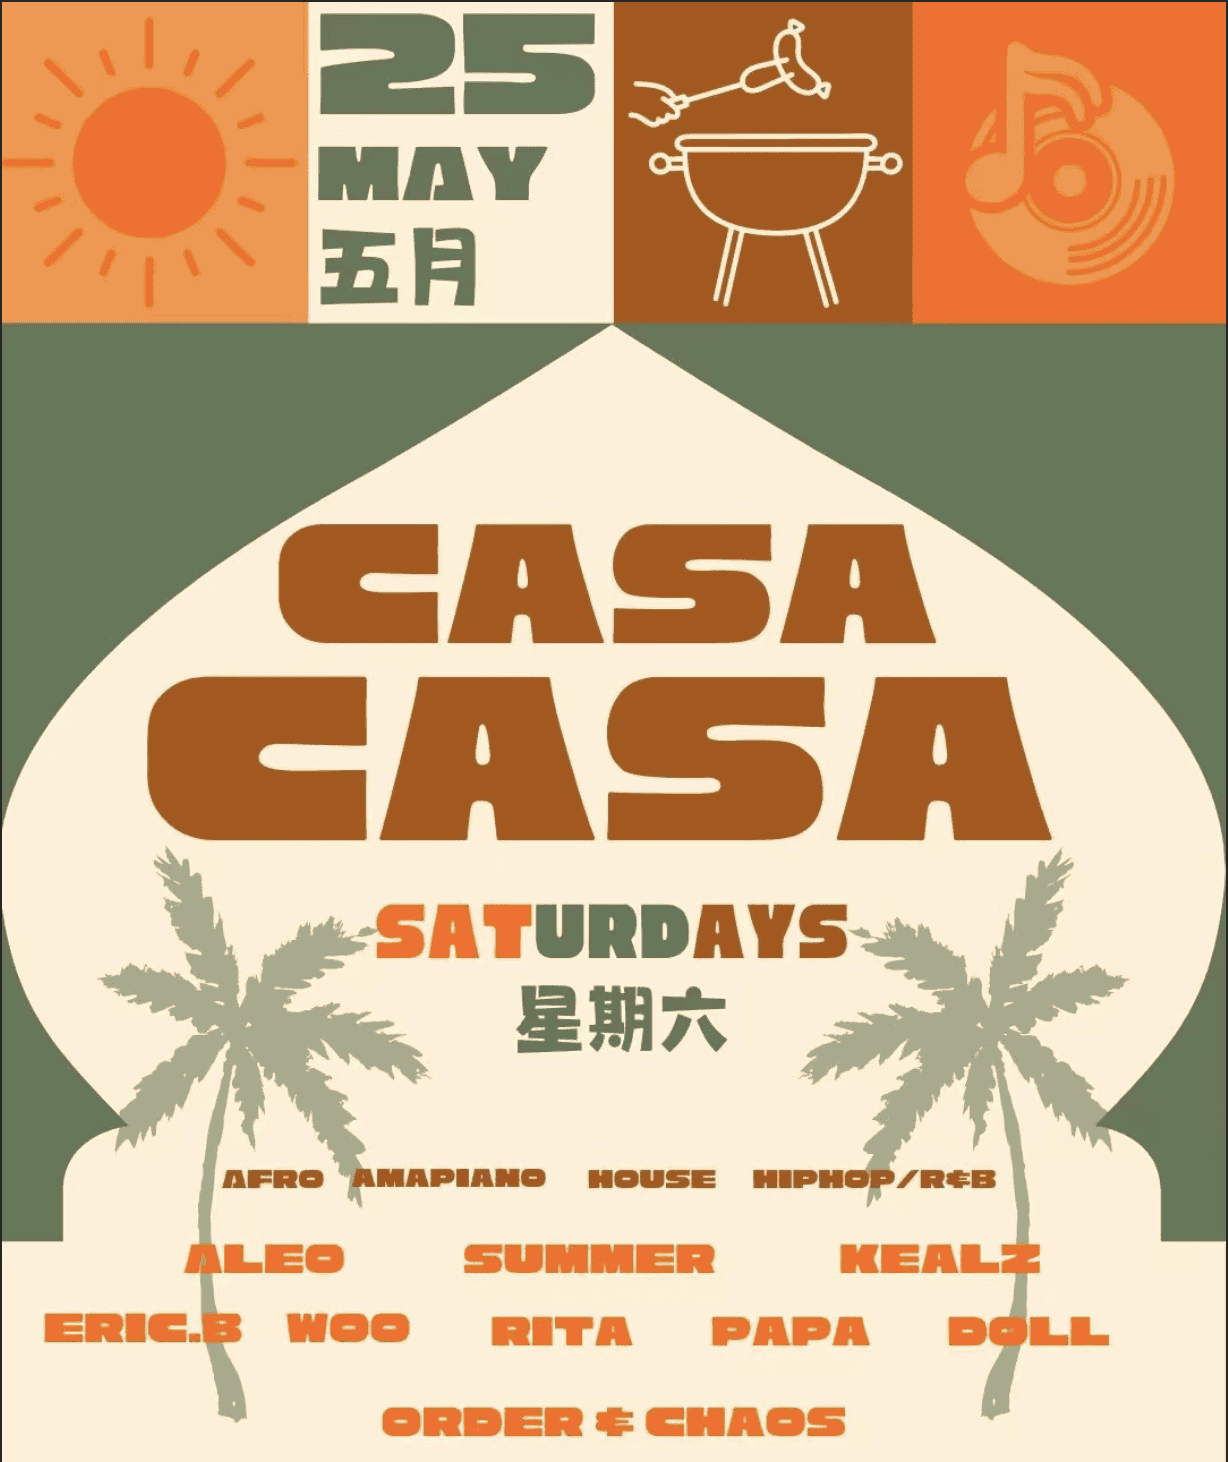 CASA CASA Saturdays featured